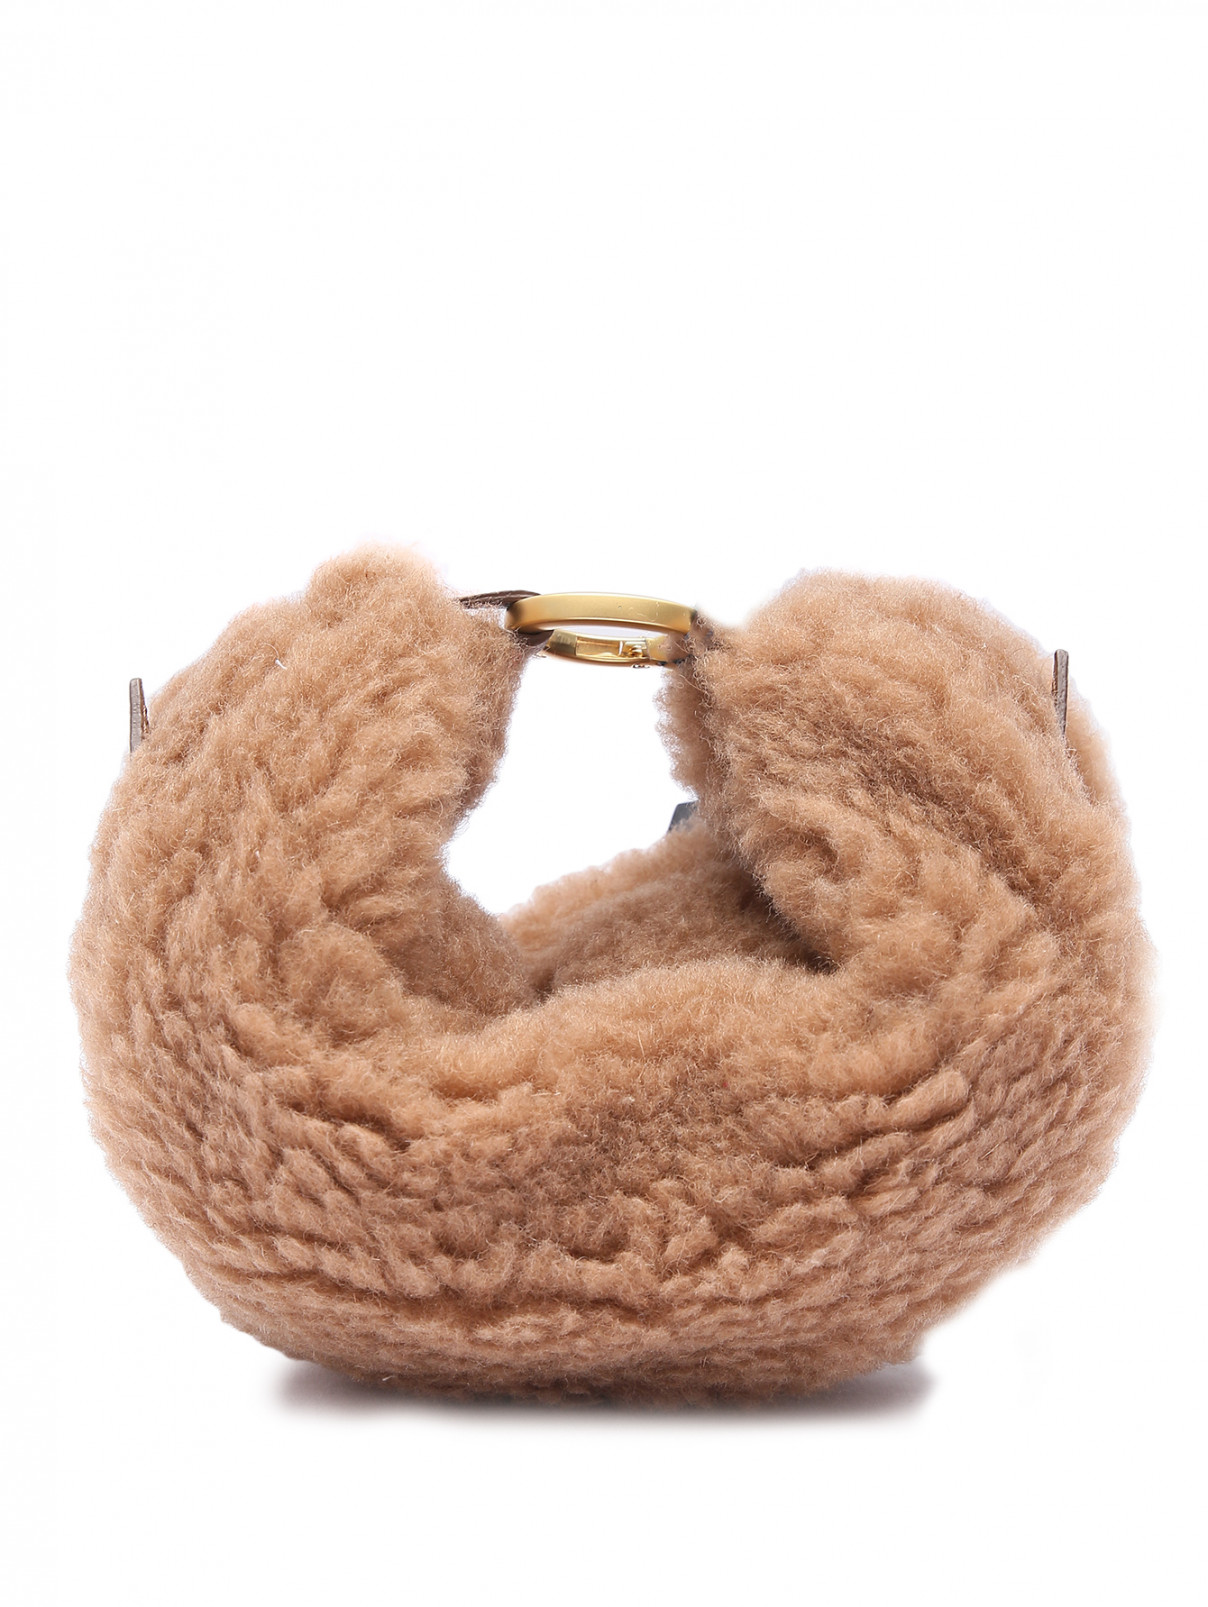 Мини-сумка из шерсти и шелка Max Mara  –  Общий вид  – Цвет:  Бежевый